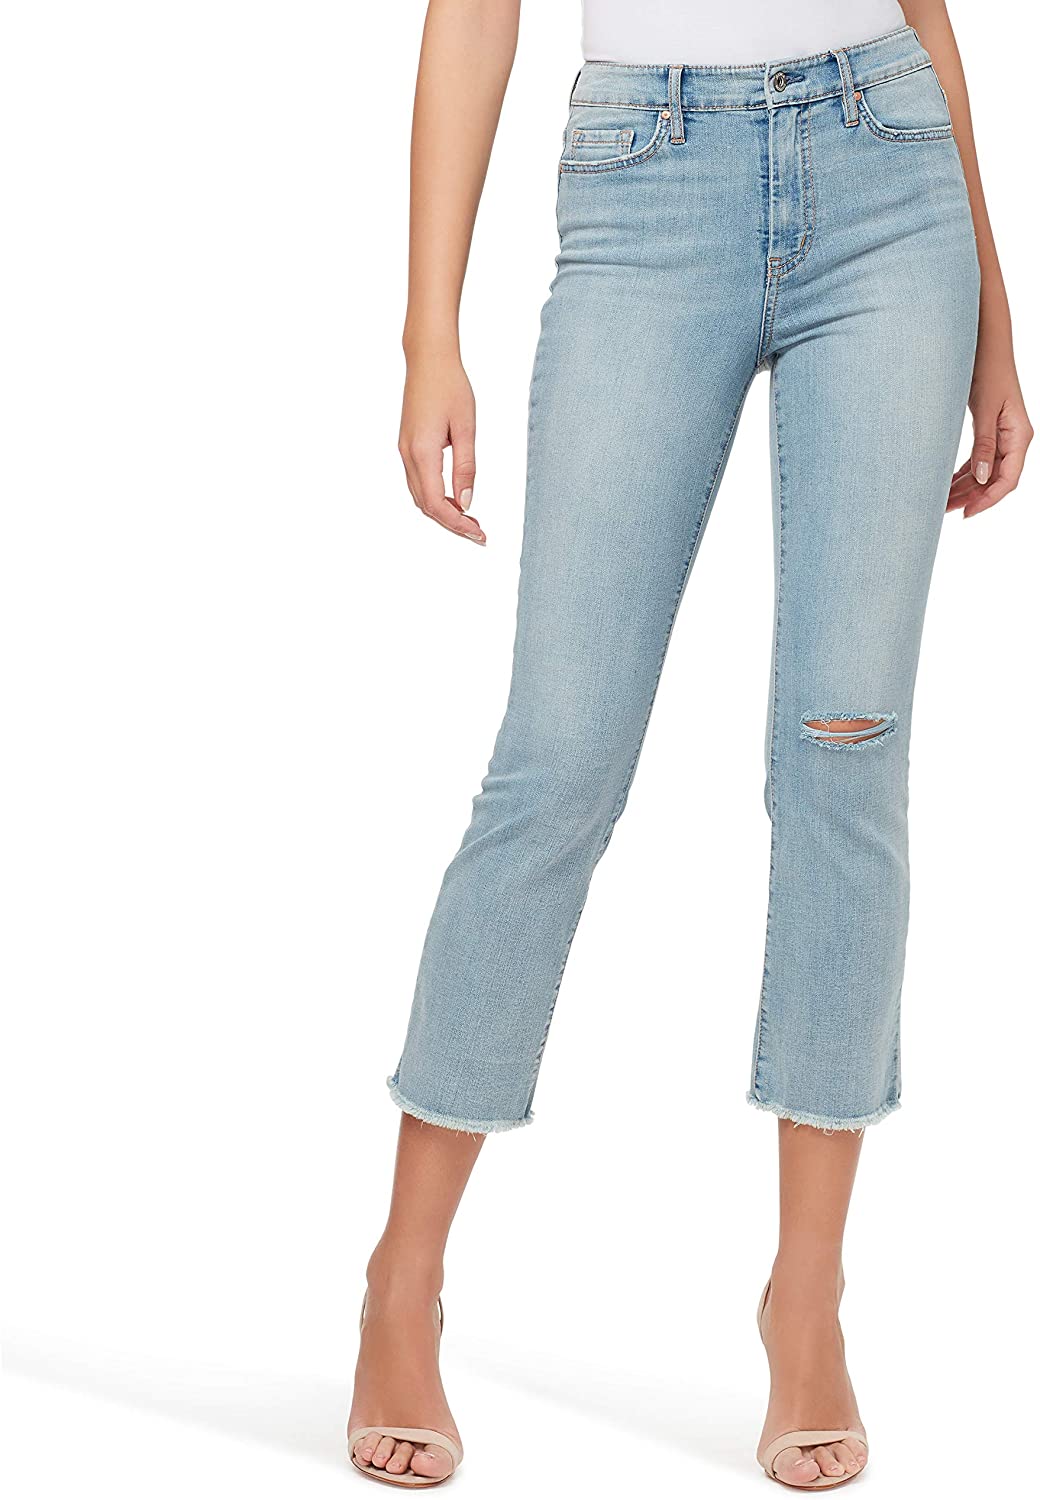 Jessica Simpson Women's Adored Hr Kick Flare Jeans